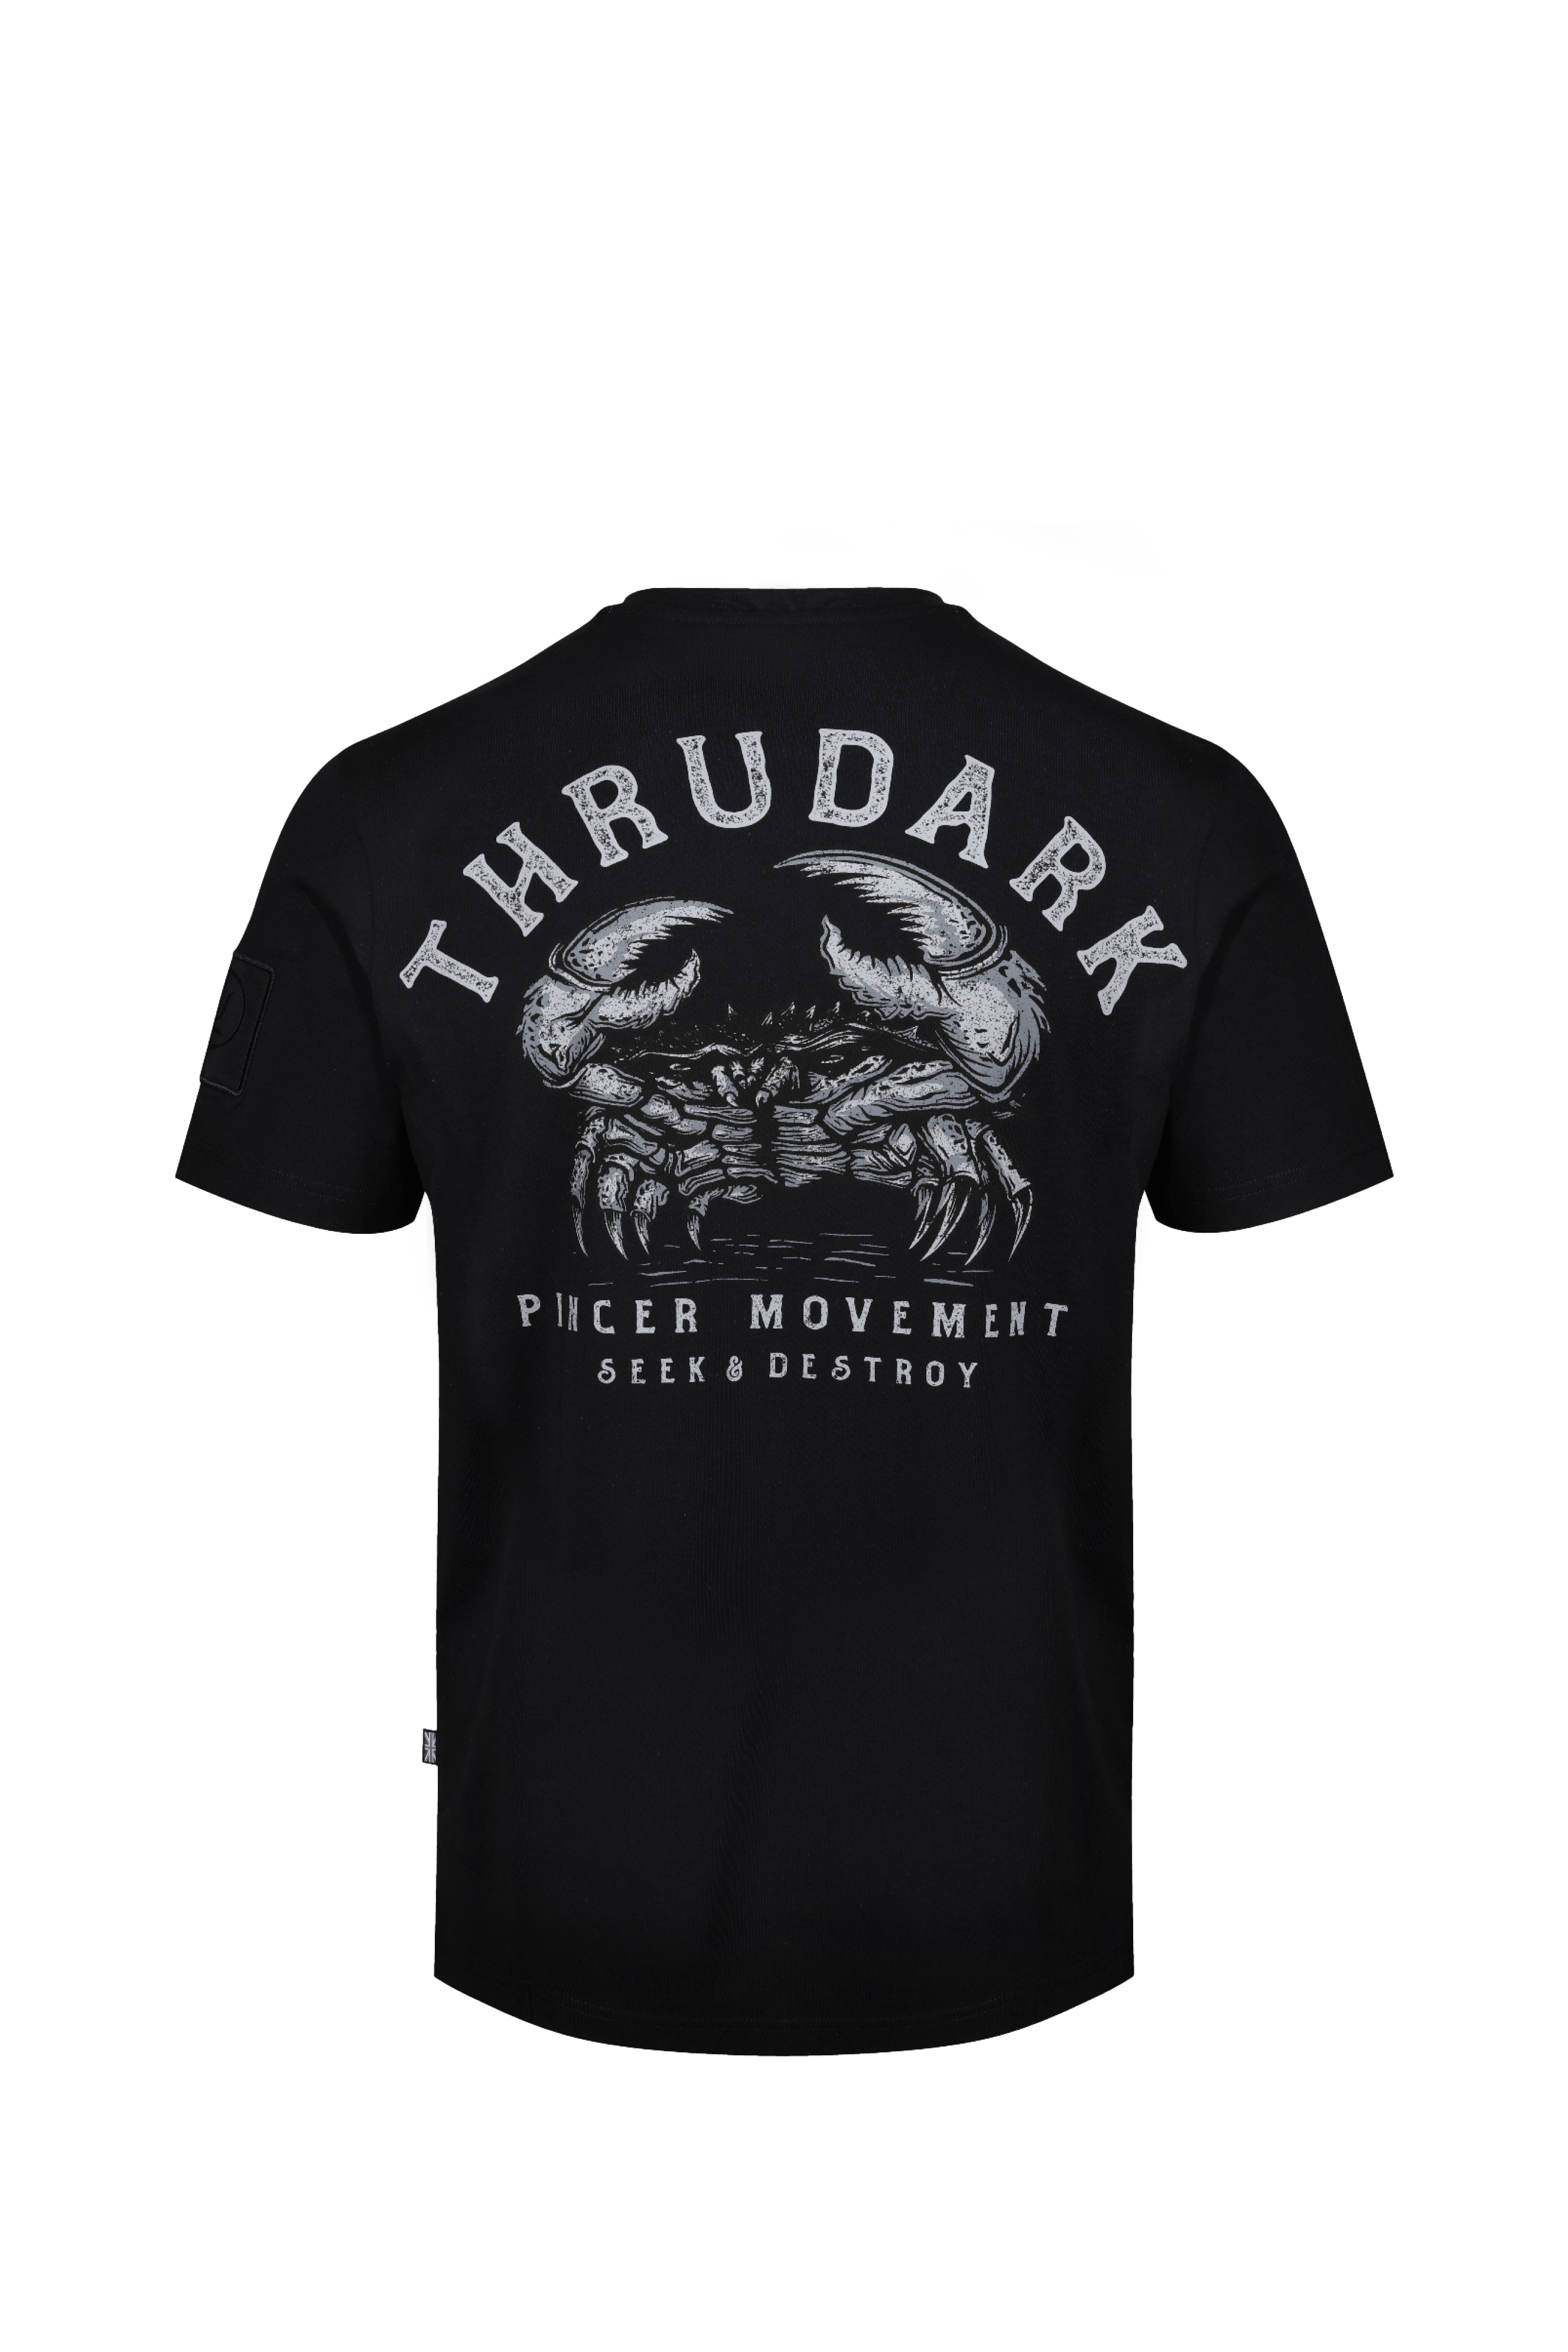 Thrudark  Insignia T-shirt - Pincer Movement Small